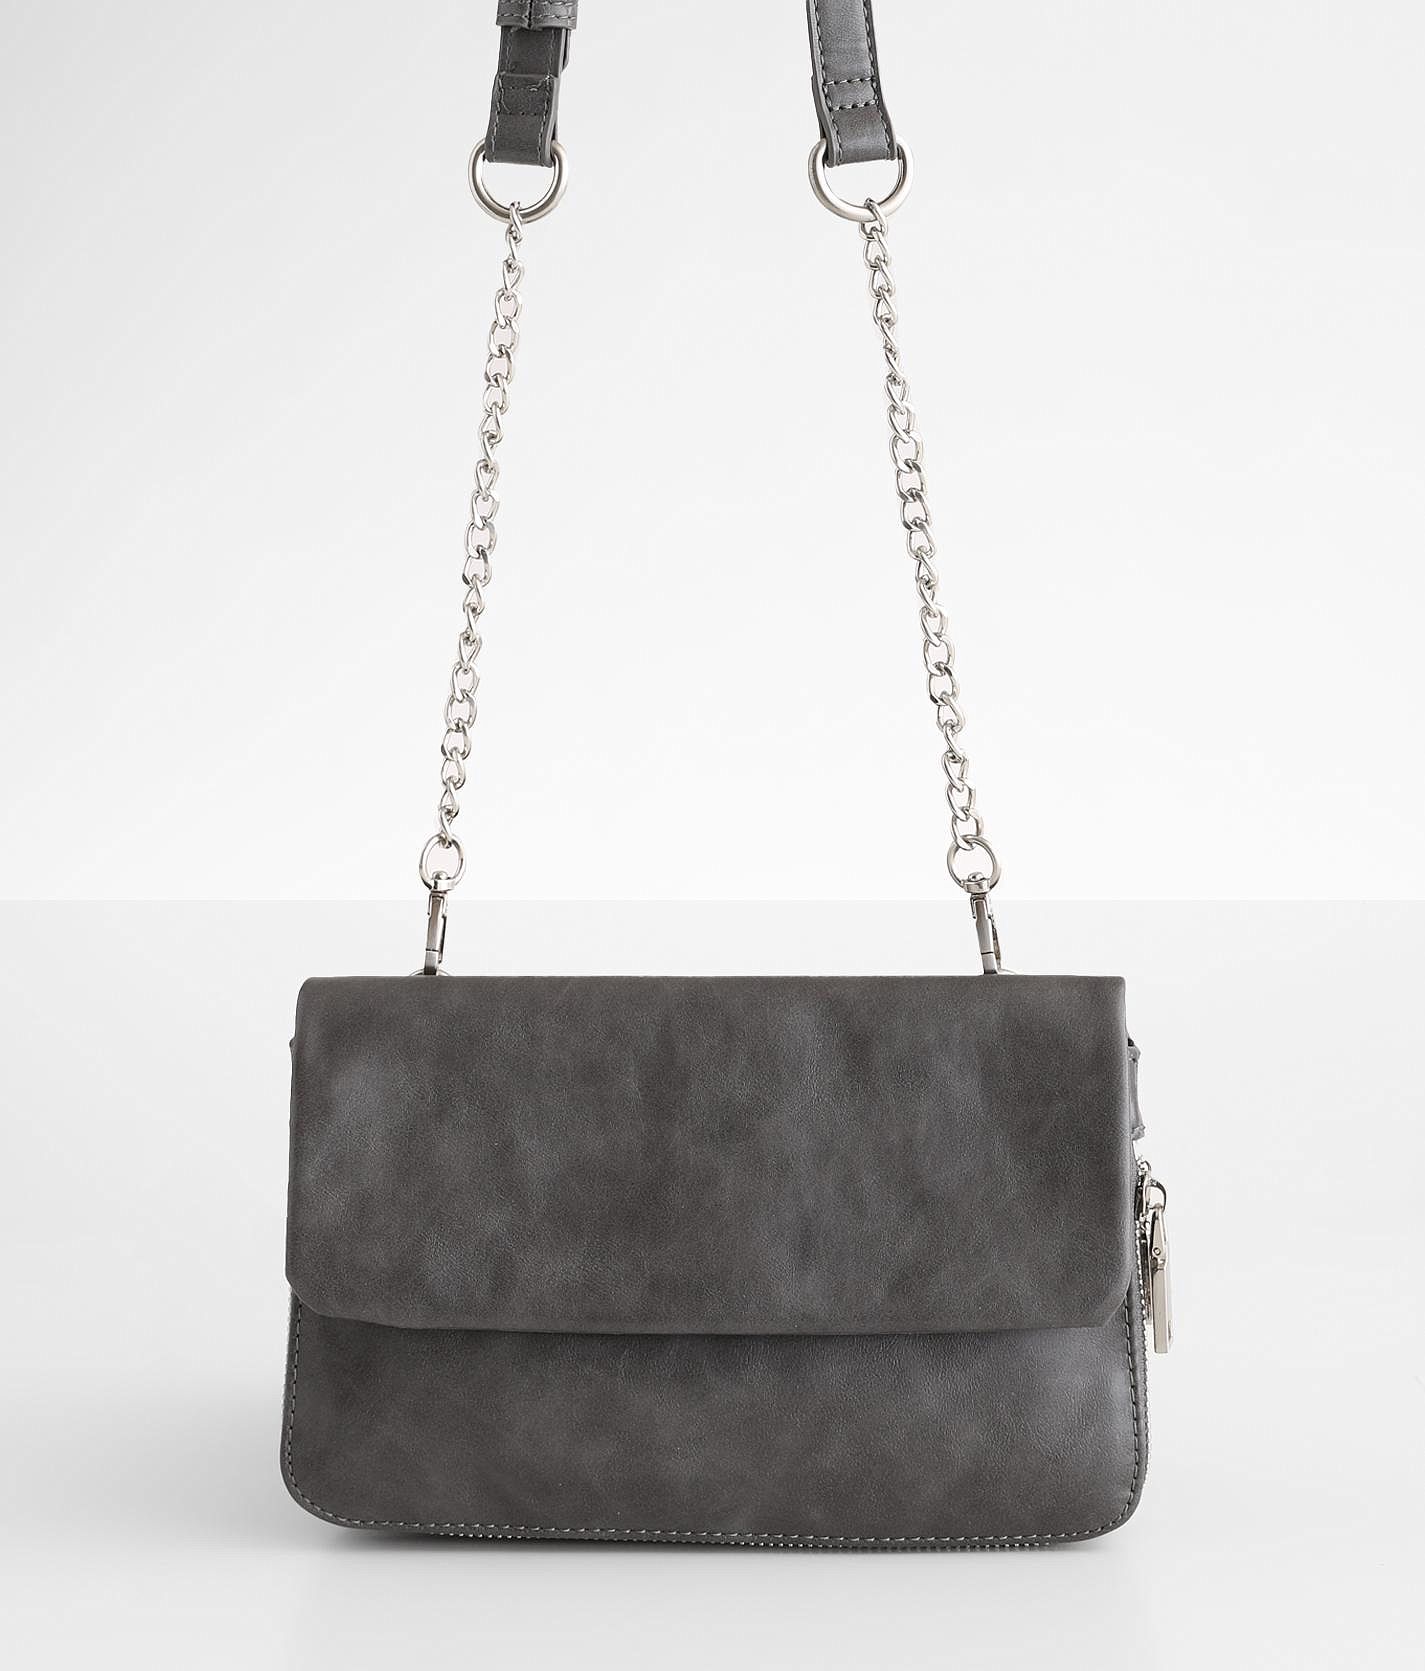 Moda Luxe Crossbody Shoulder Bag Purse Gray Chain Strap